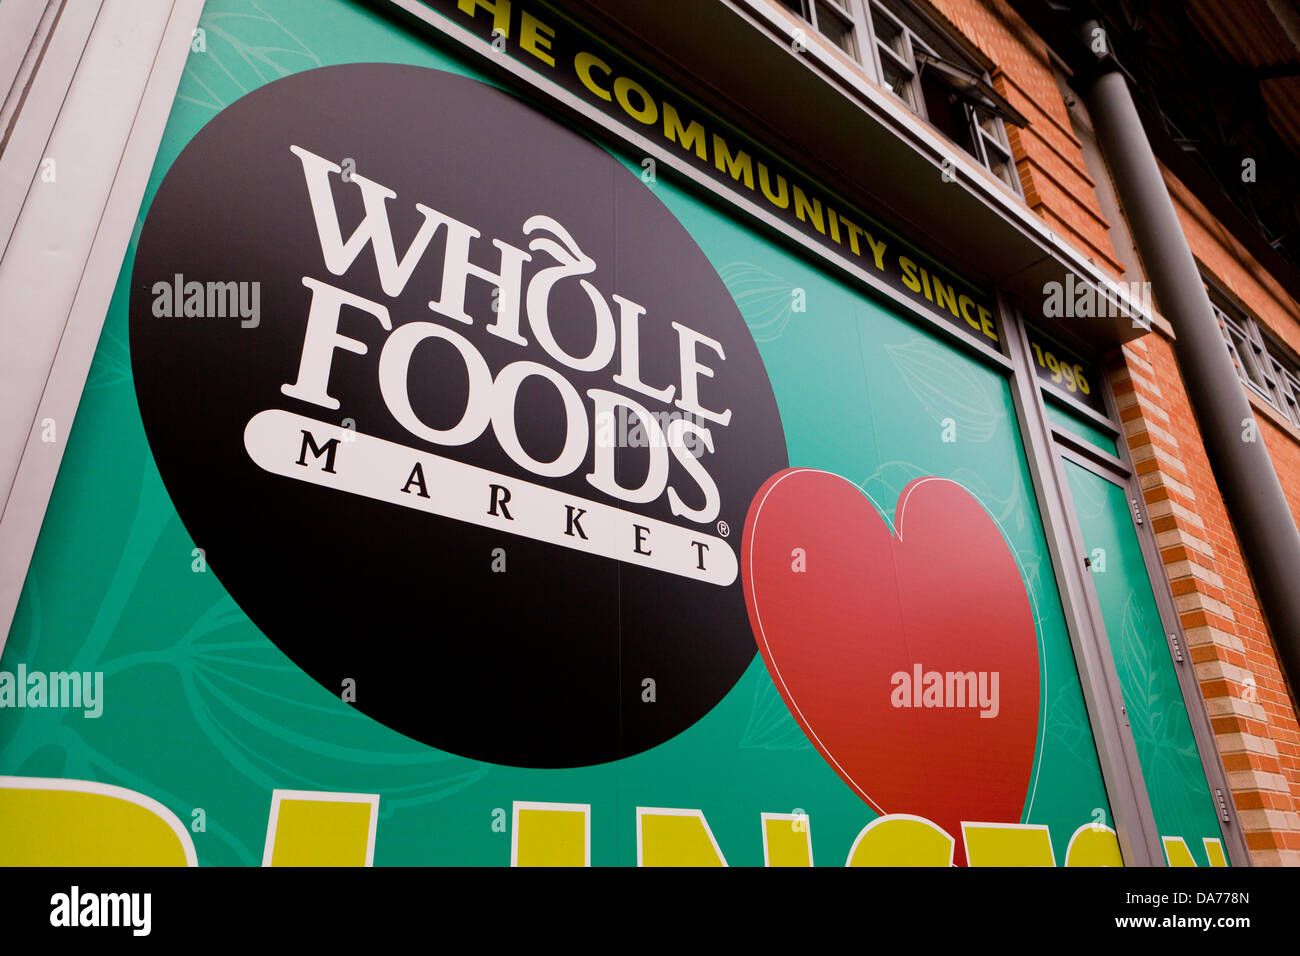 Whole Foods Market sign Banque D'Images